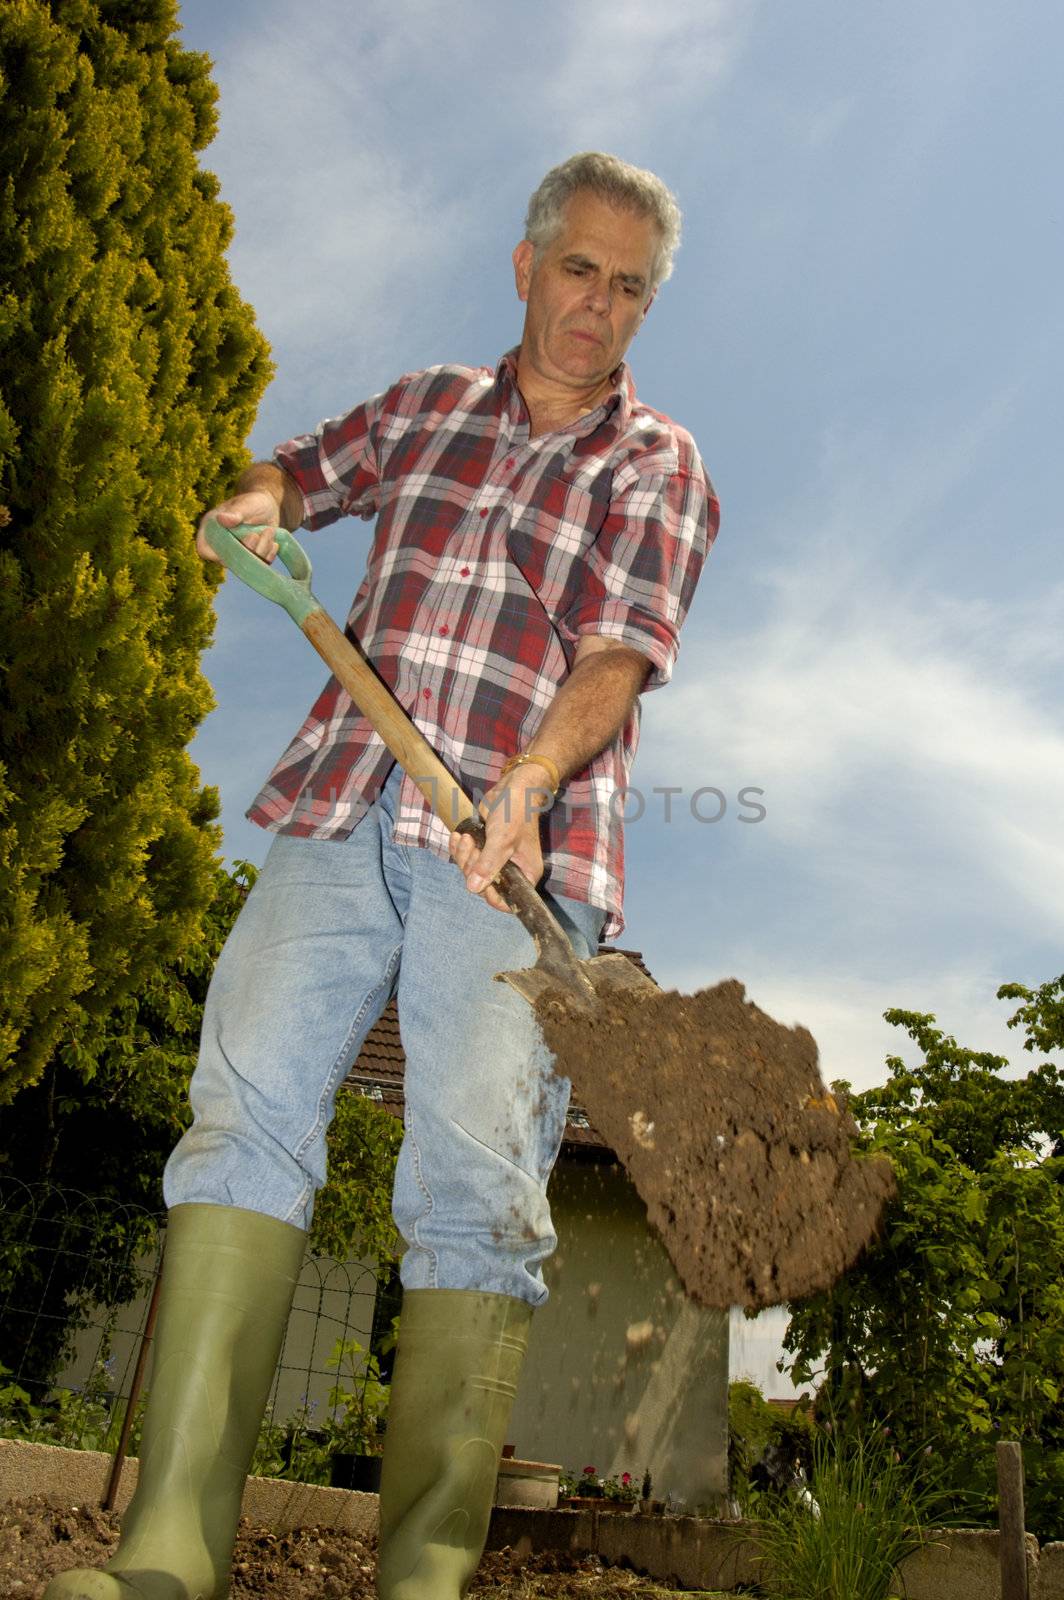 Digging the garden by Bateleur